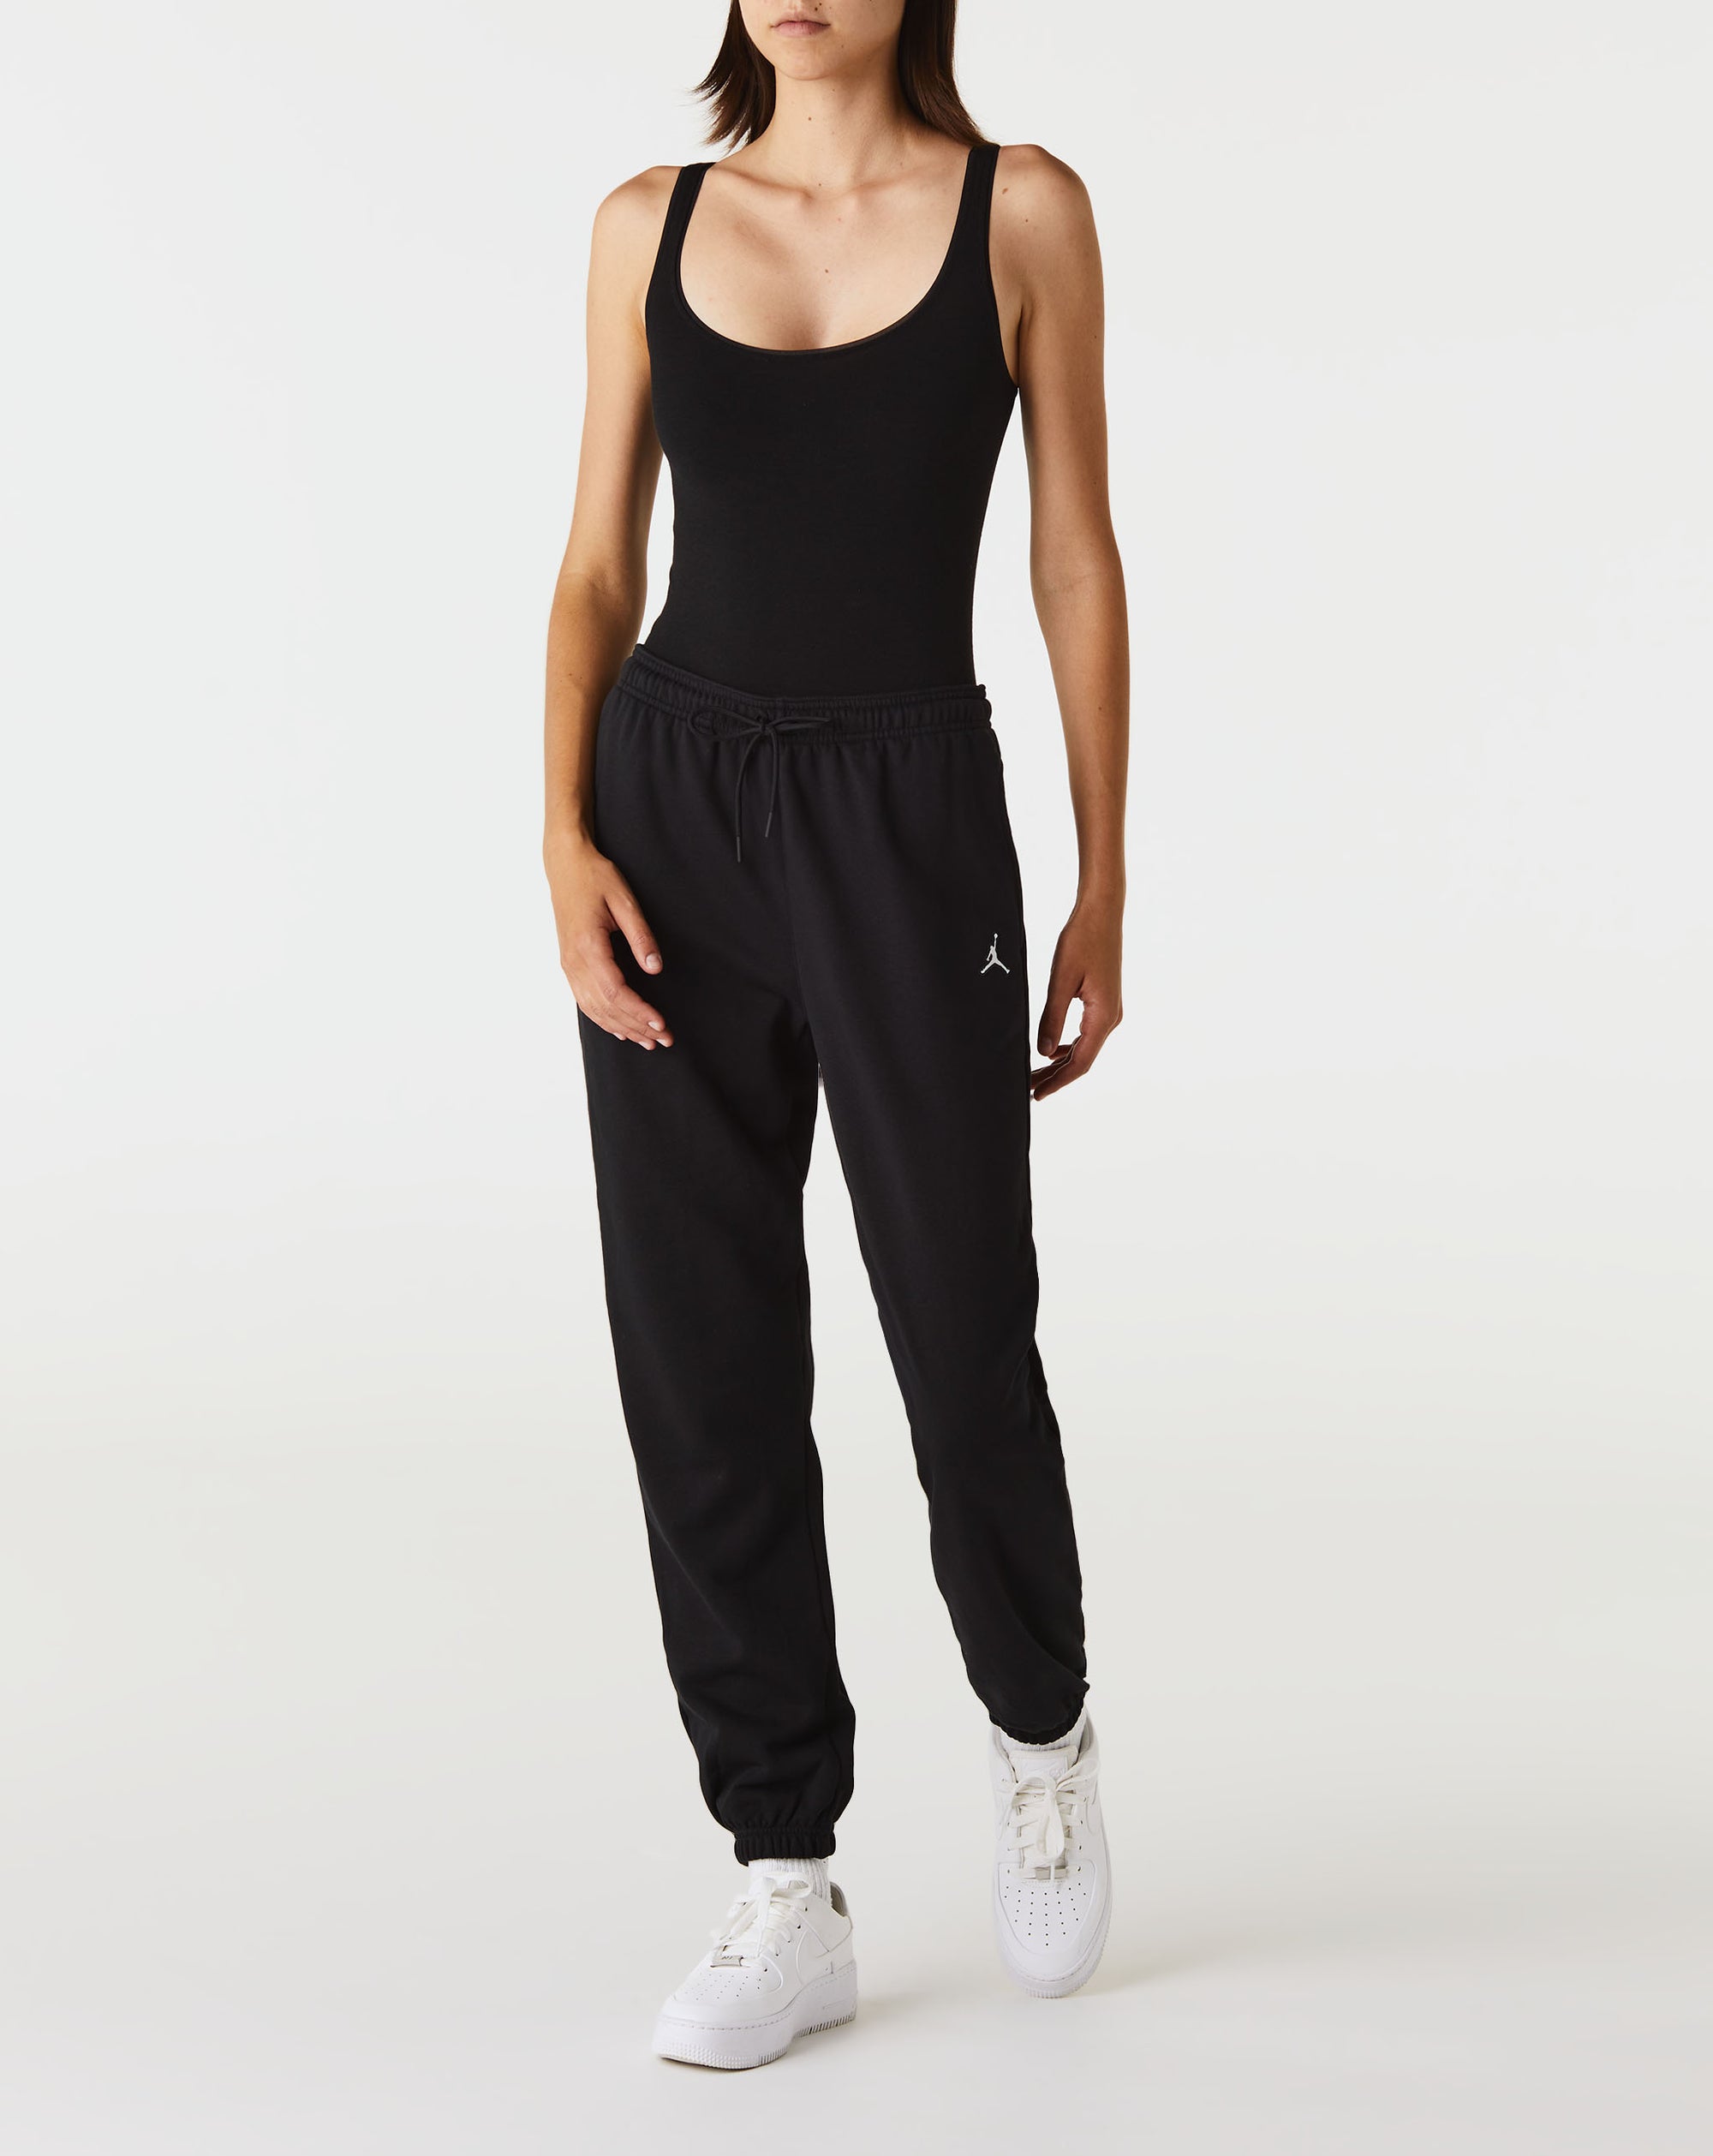 Air Jordan Women's Jordan Essentials Fleece Pants - Rule of Next Apparel